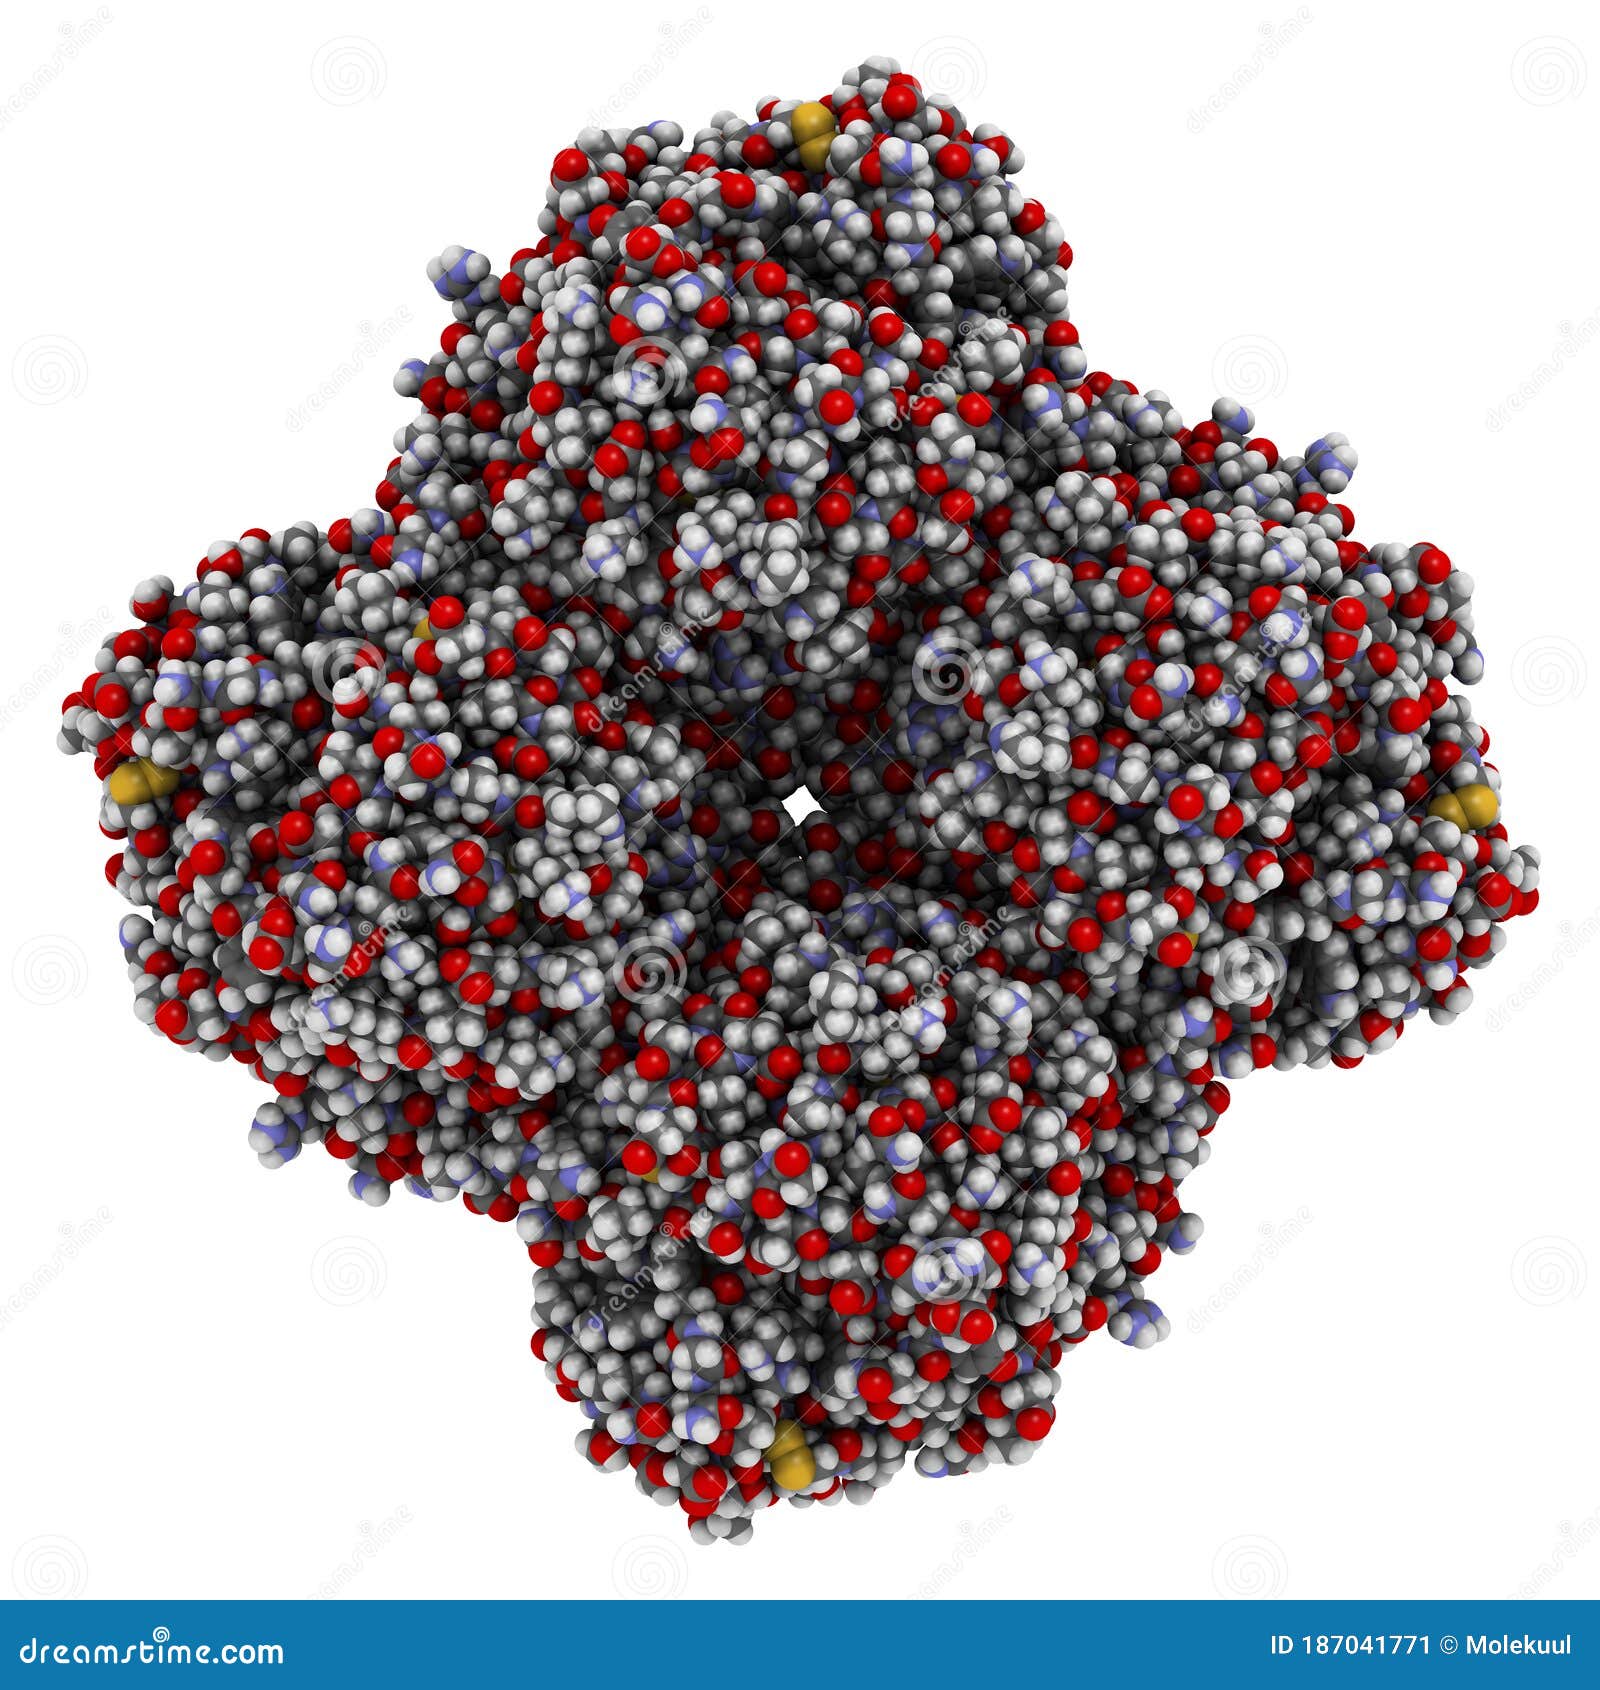 neuraminidase enzyme. structure of h5n1 avian influenza neuraminidase